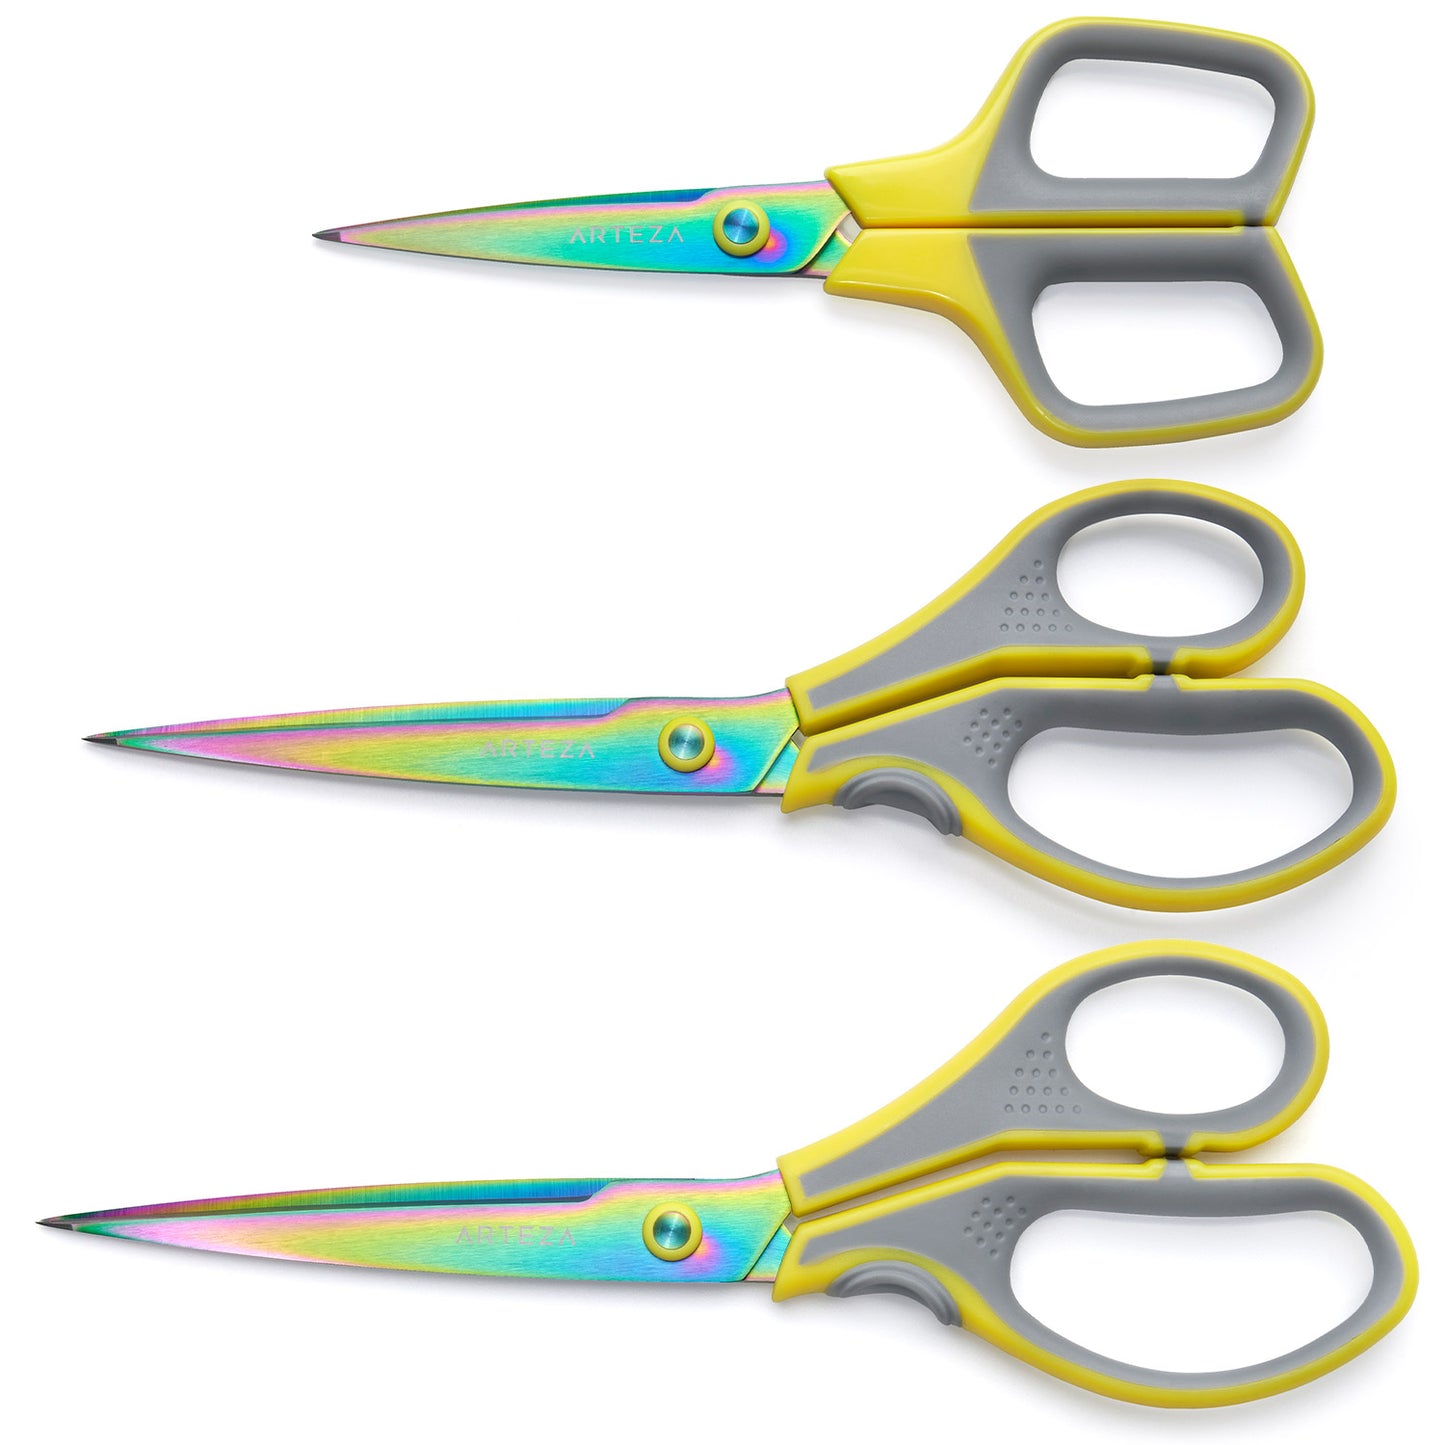 Fabric Scissors, Iridescent Blade, Ultra-Sharp, Assorted Sizes - Set of 3